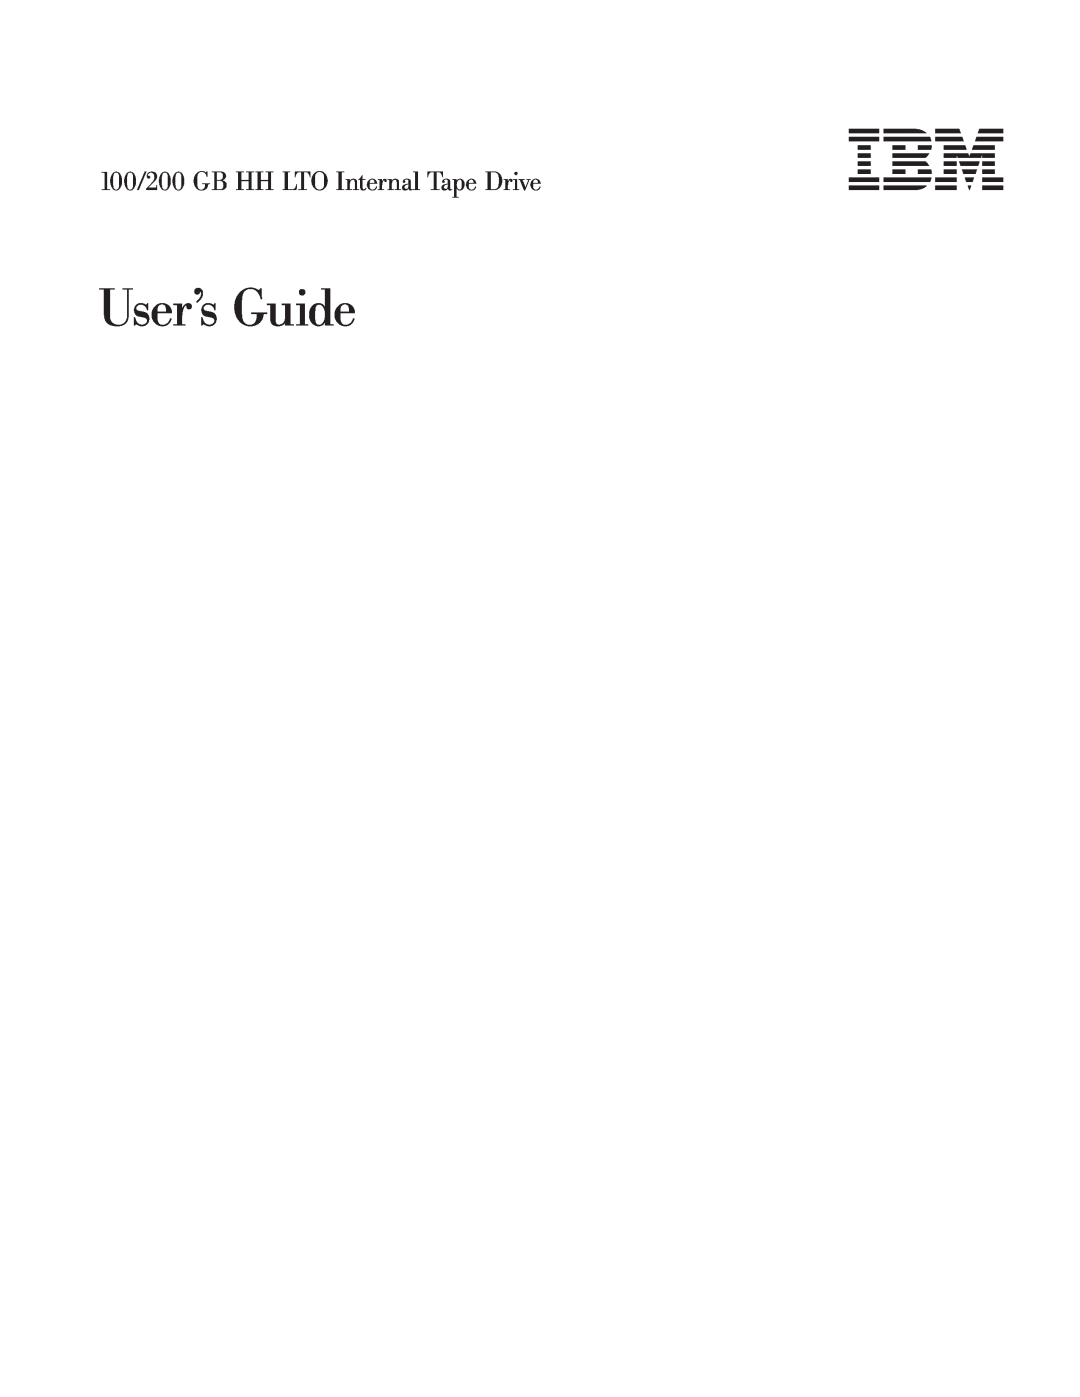 IBM manual User’s Guide, 100/200 GB HH LTO Internal Tape Drive 